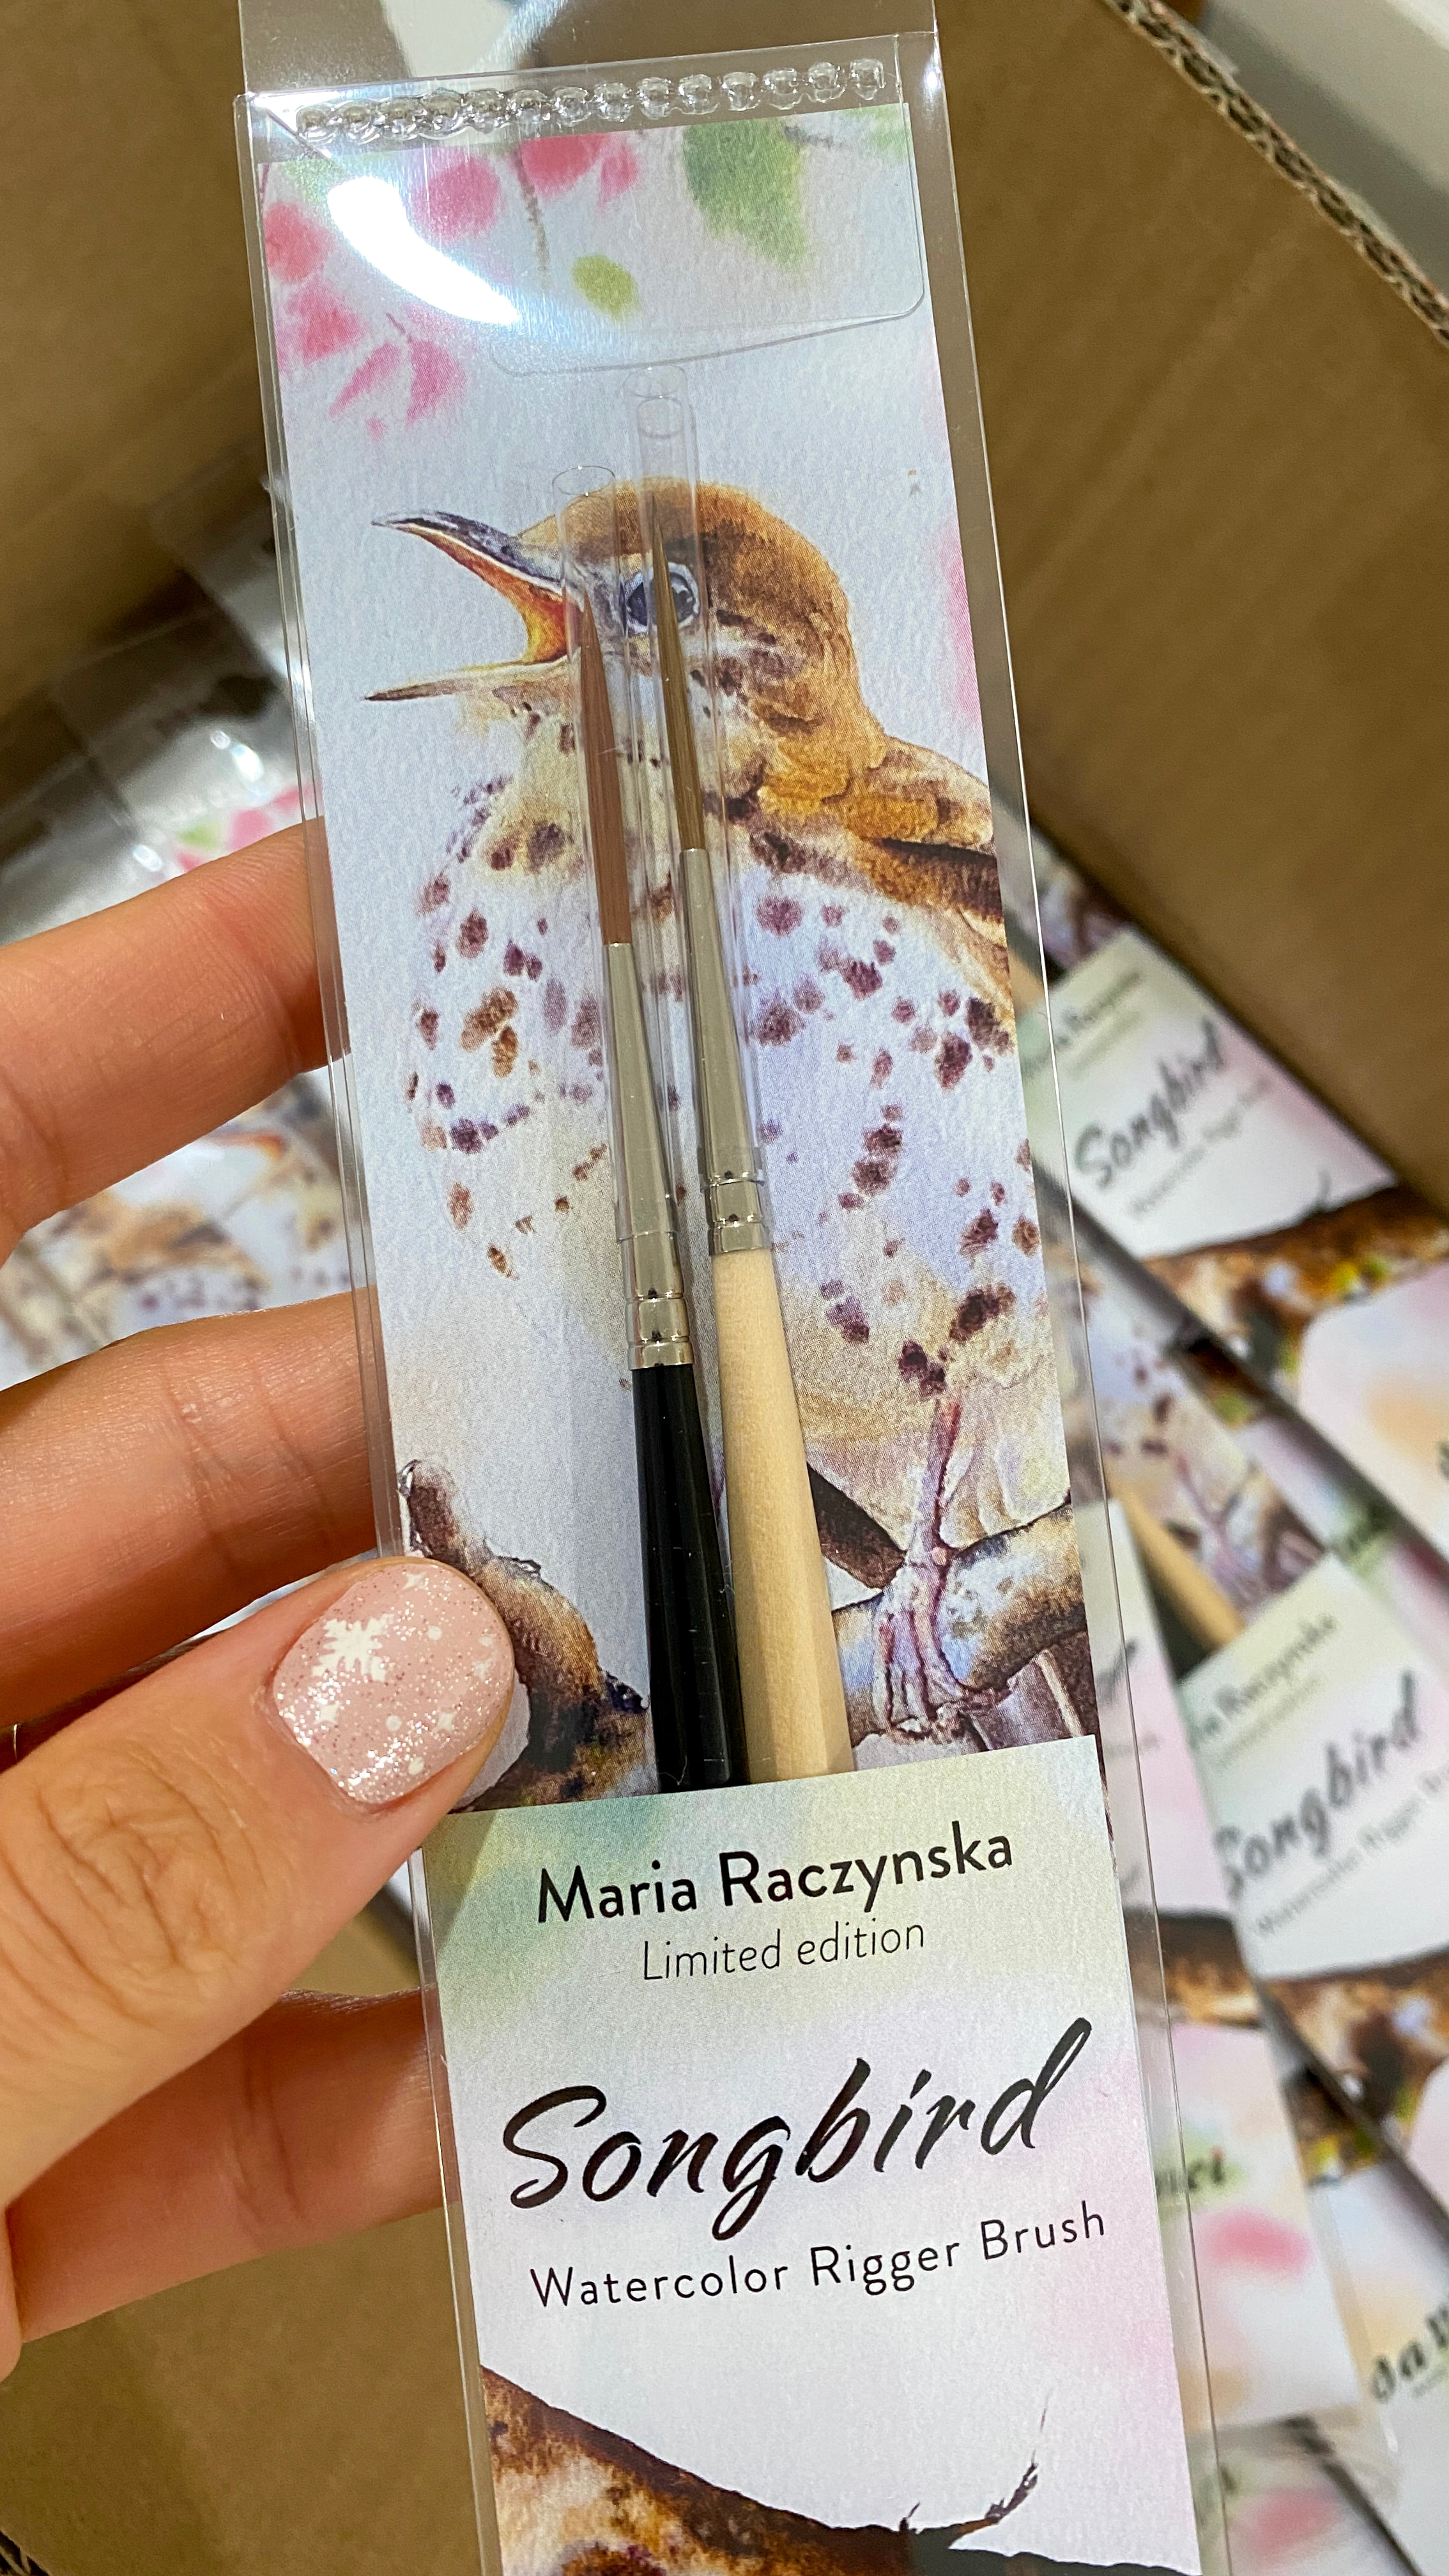 watercolor rigger brush vegan cruelty free handmade in Germany by Da Vinci  and Maria Raczynska